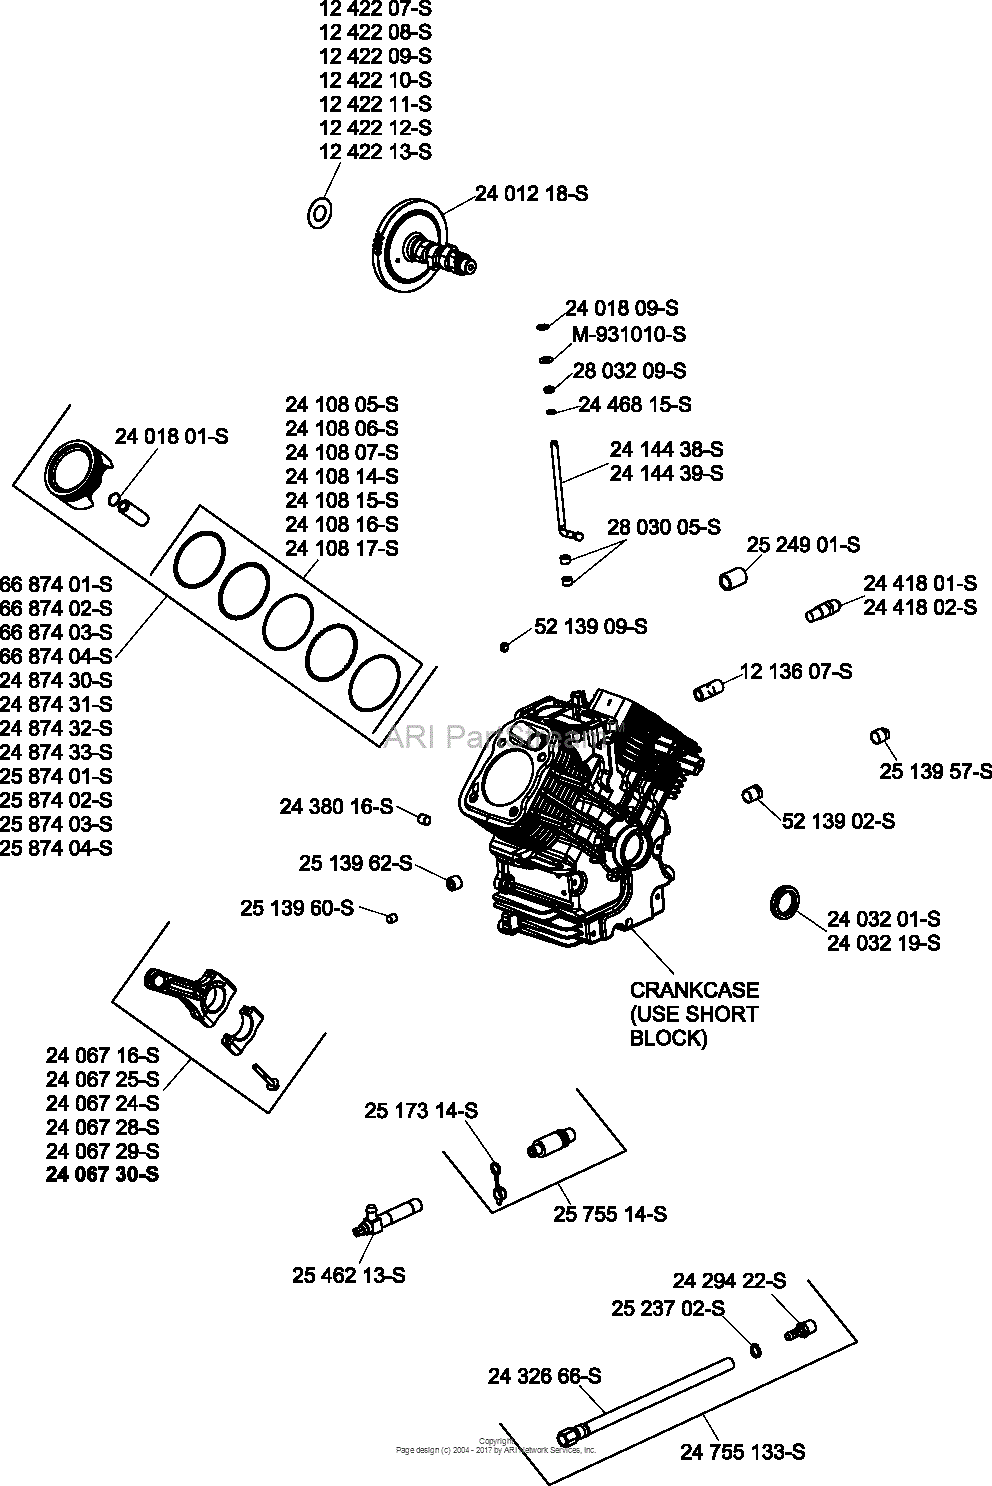 toro lx500 manual wiring diagram